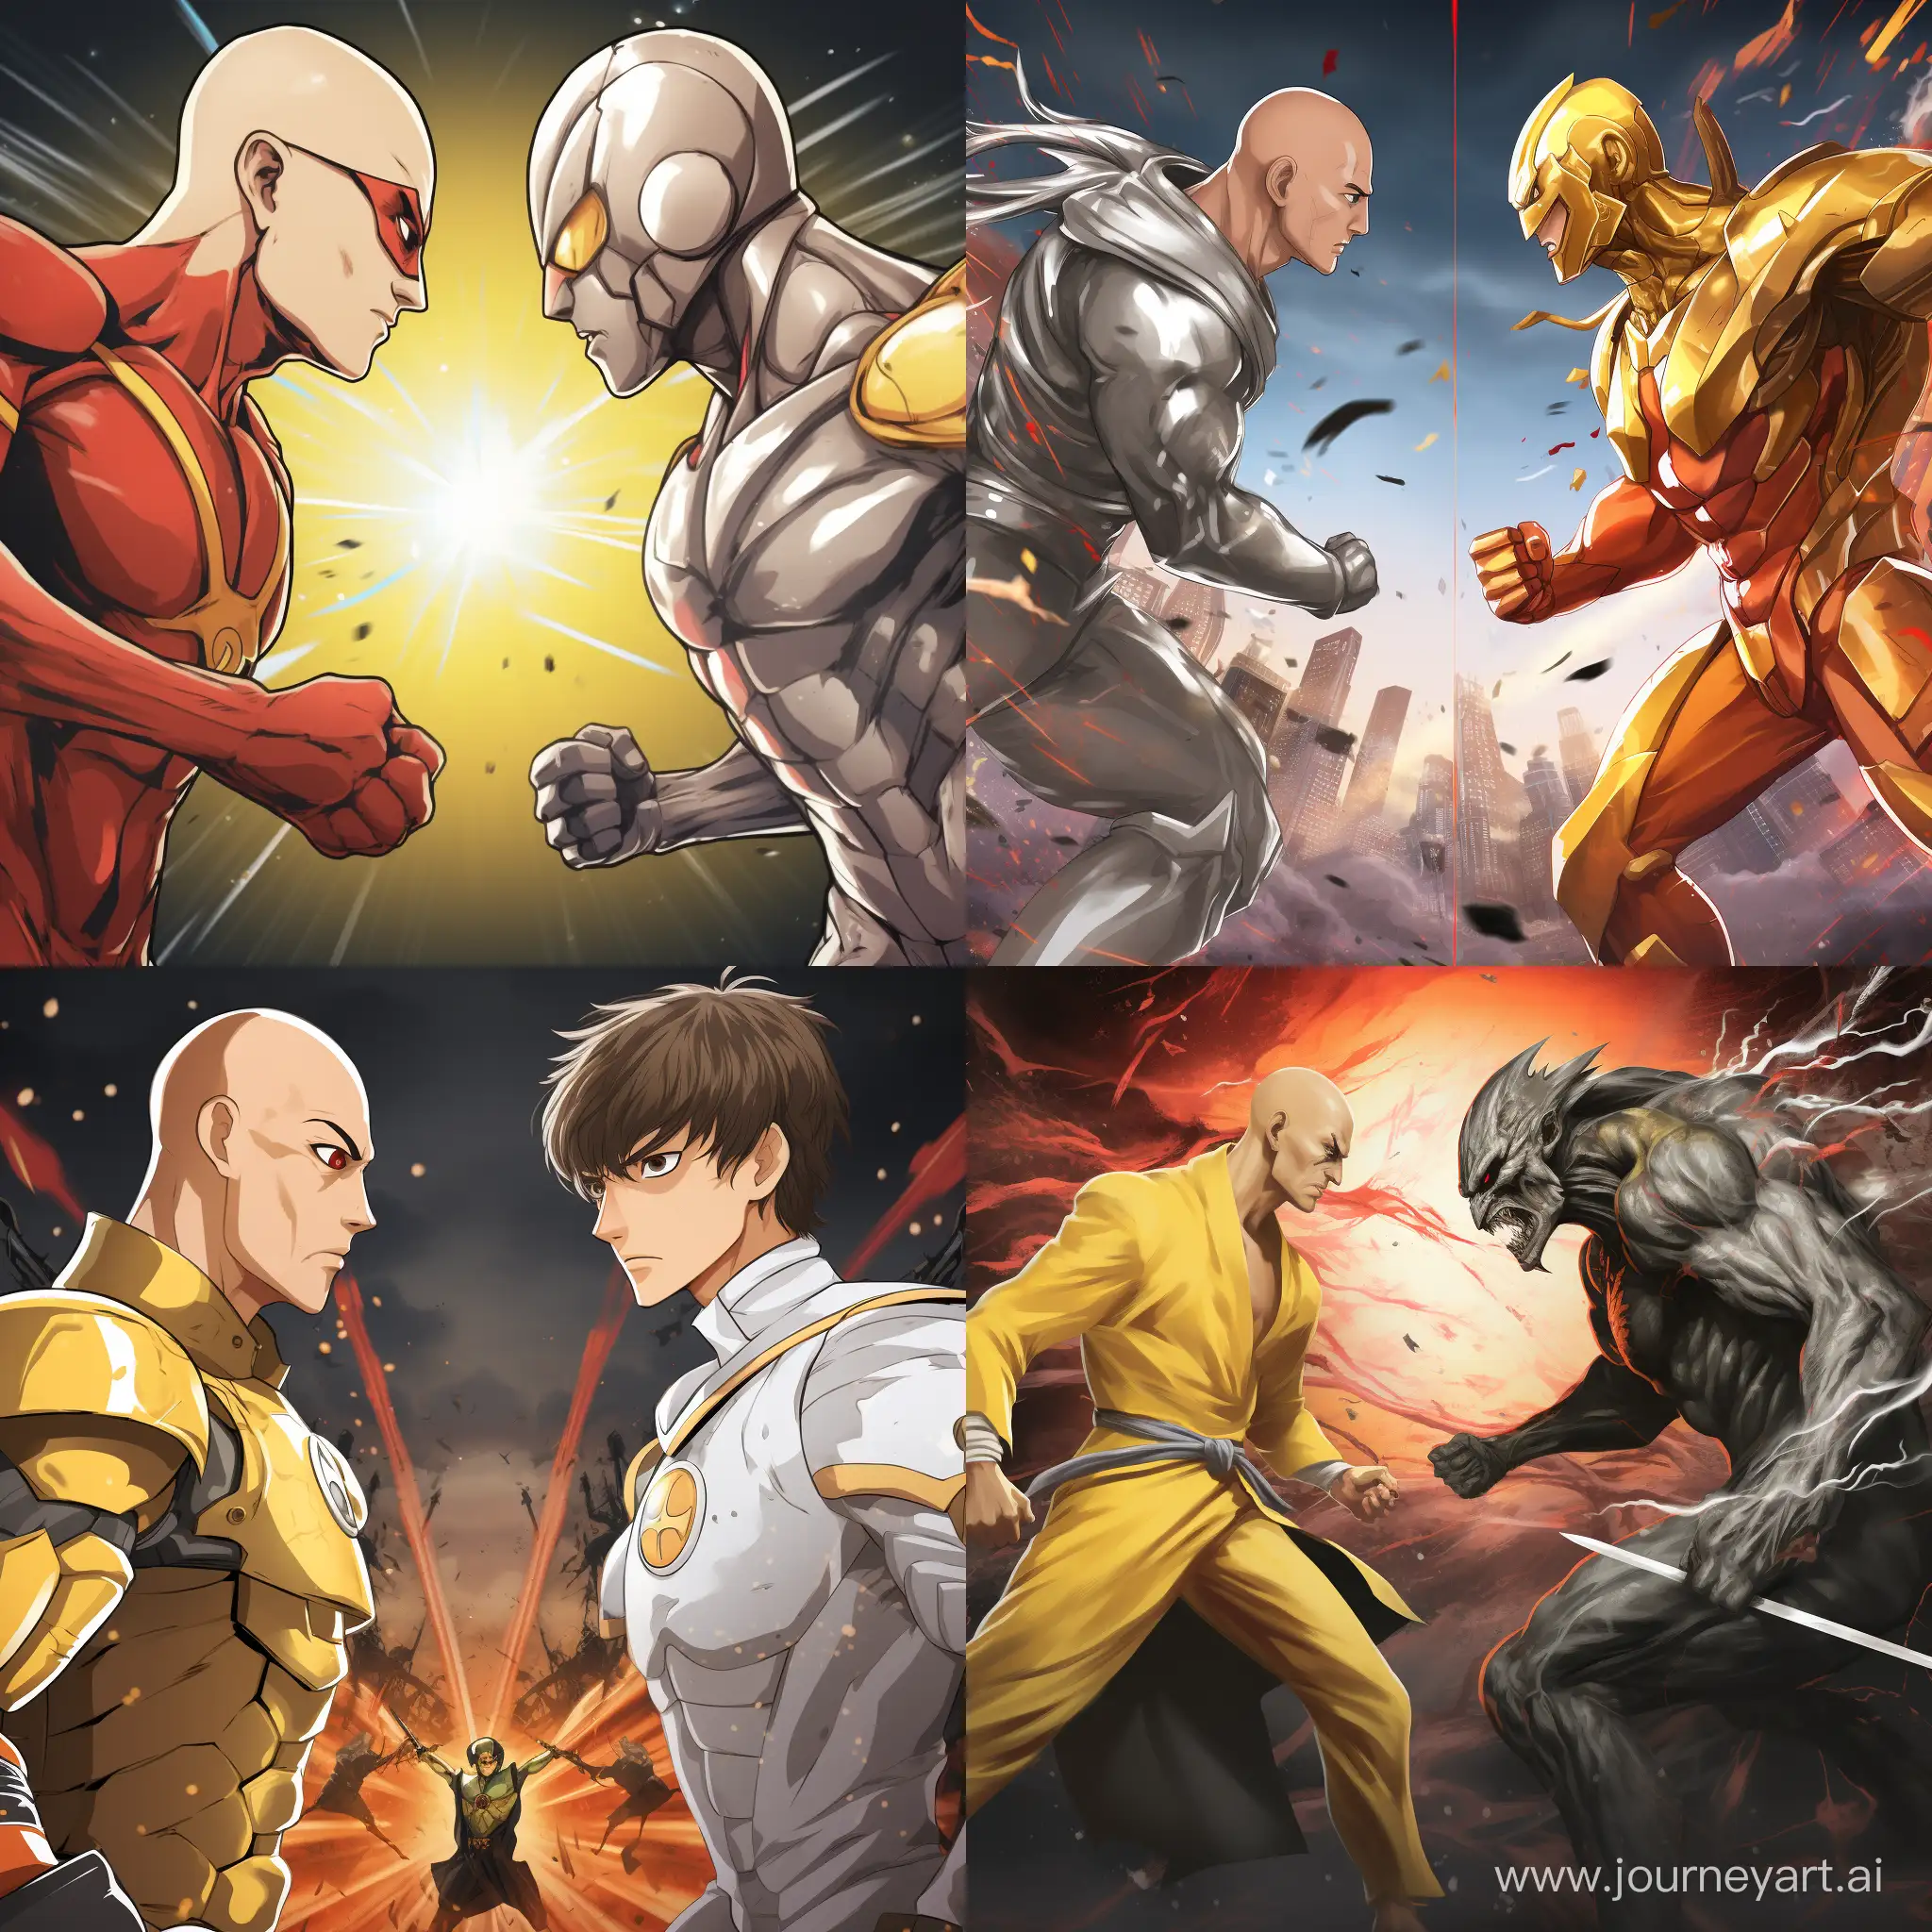 Epic-Showdown-Satoru-Gojo-vs-Saitama-in-a-11-Battle-Anime-Art